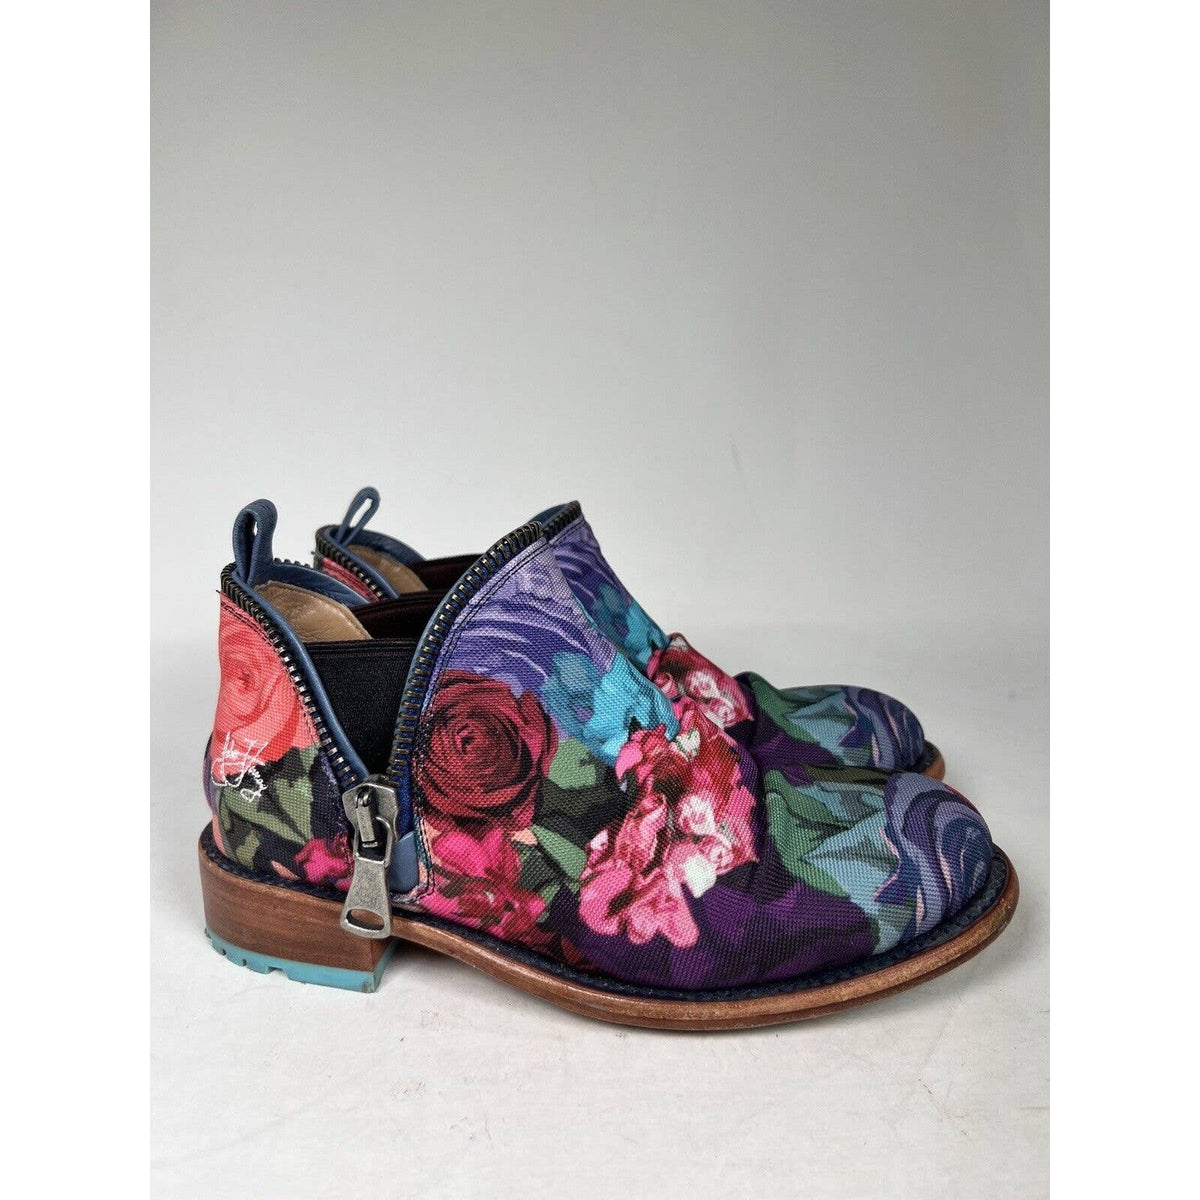 John Fluevog Evers 2.0 Floral Ankle Boots Sz.6 W